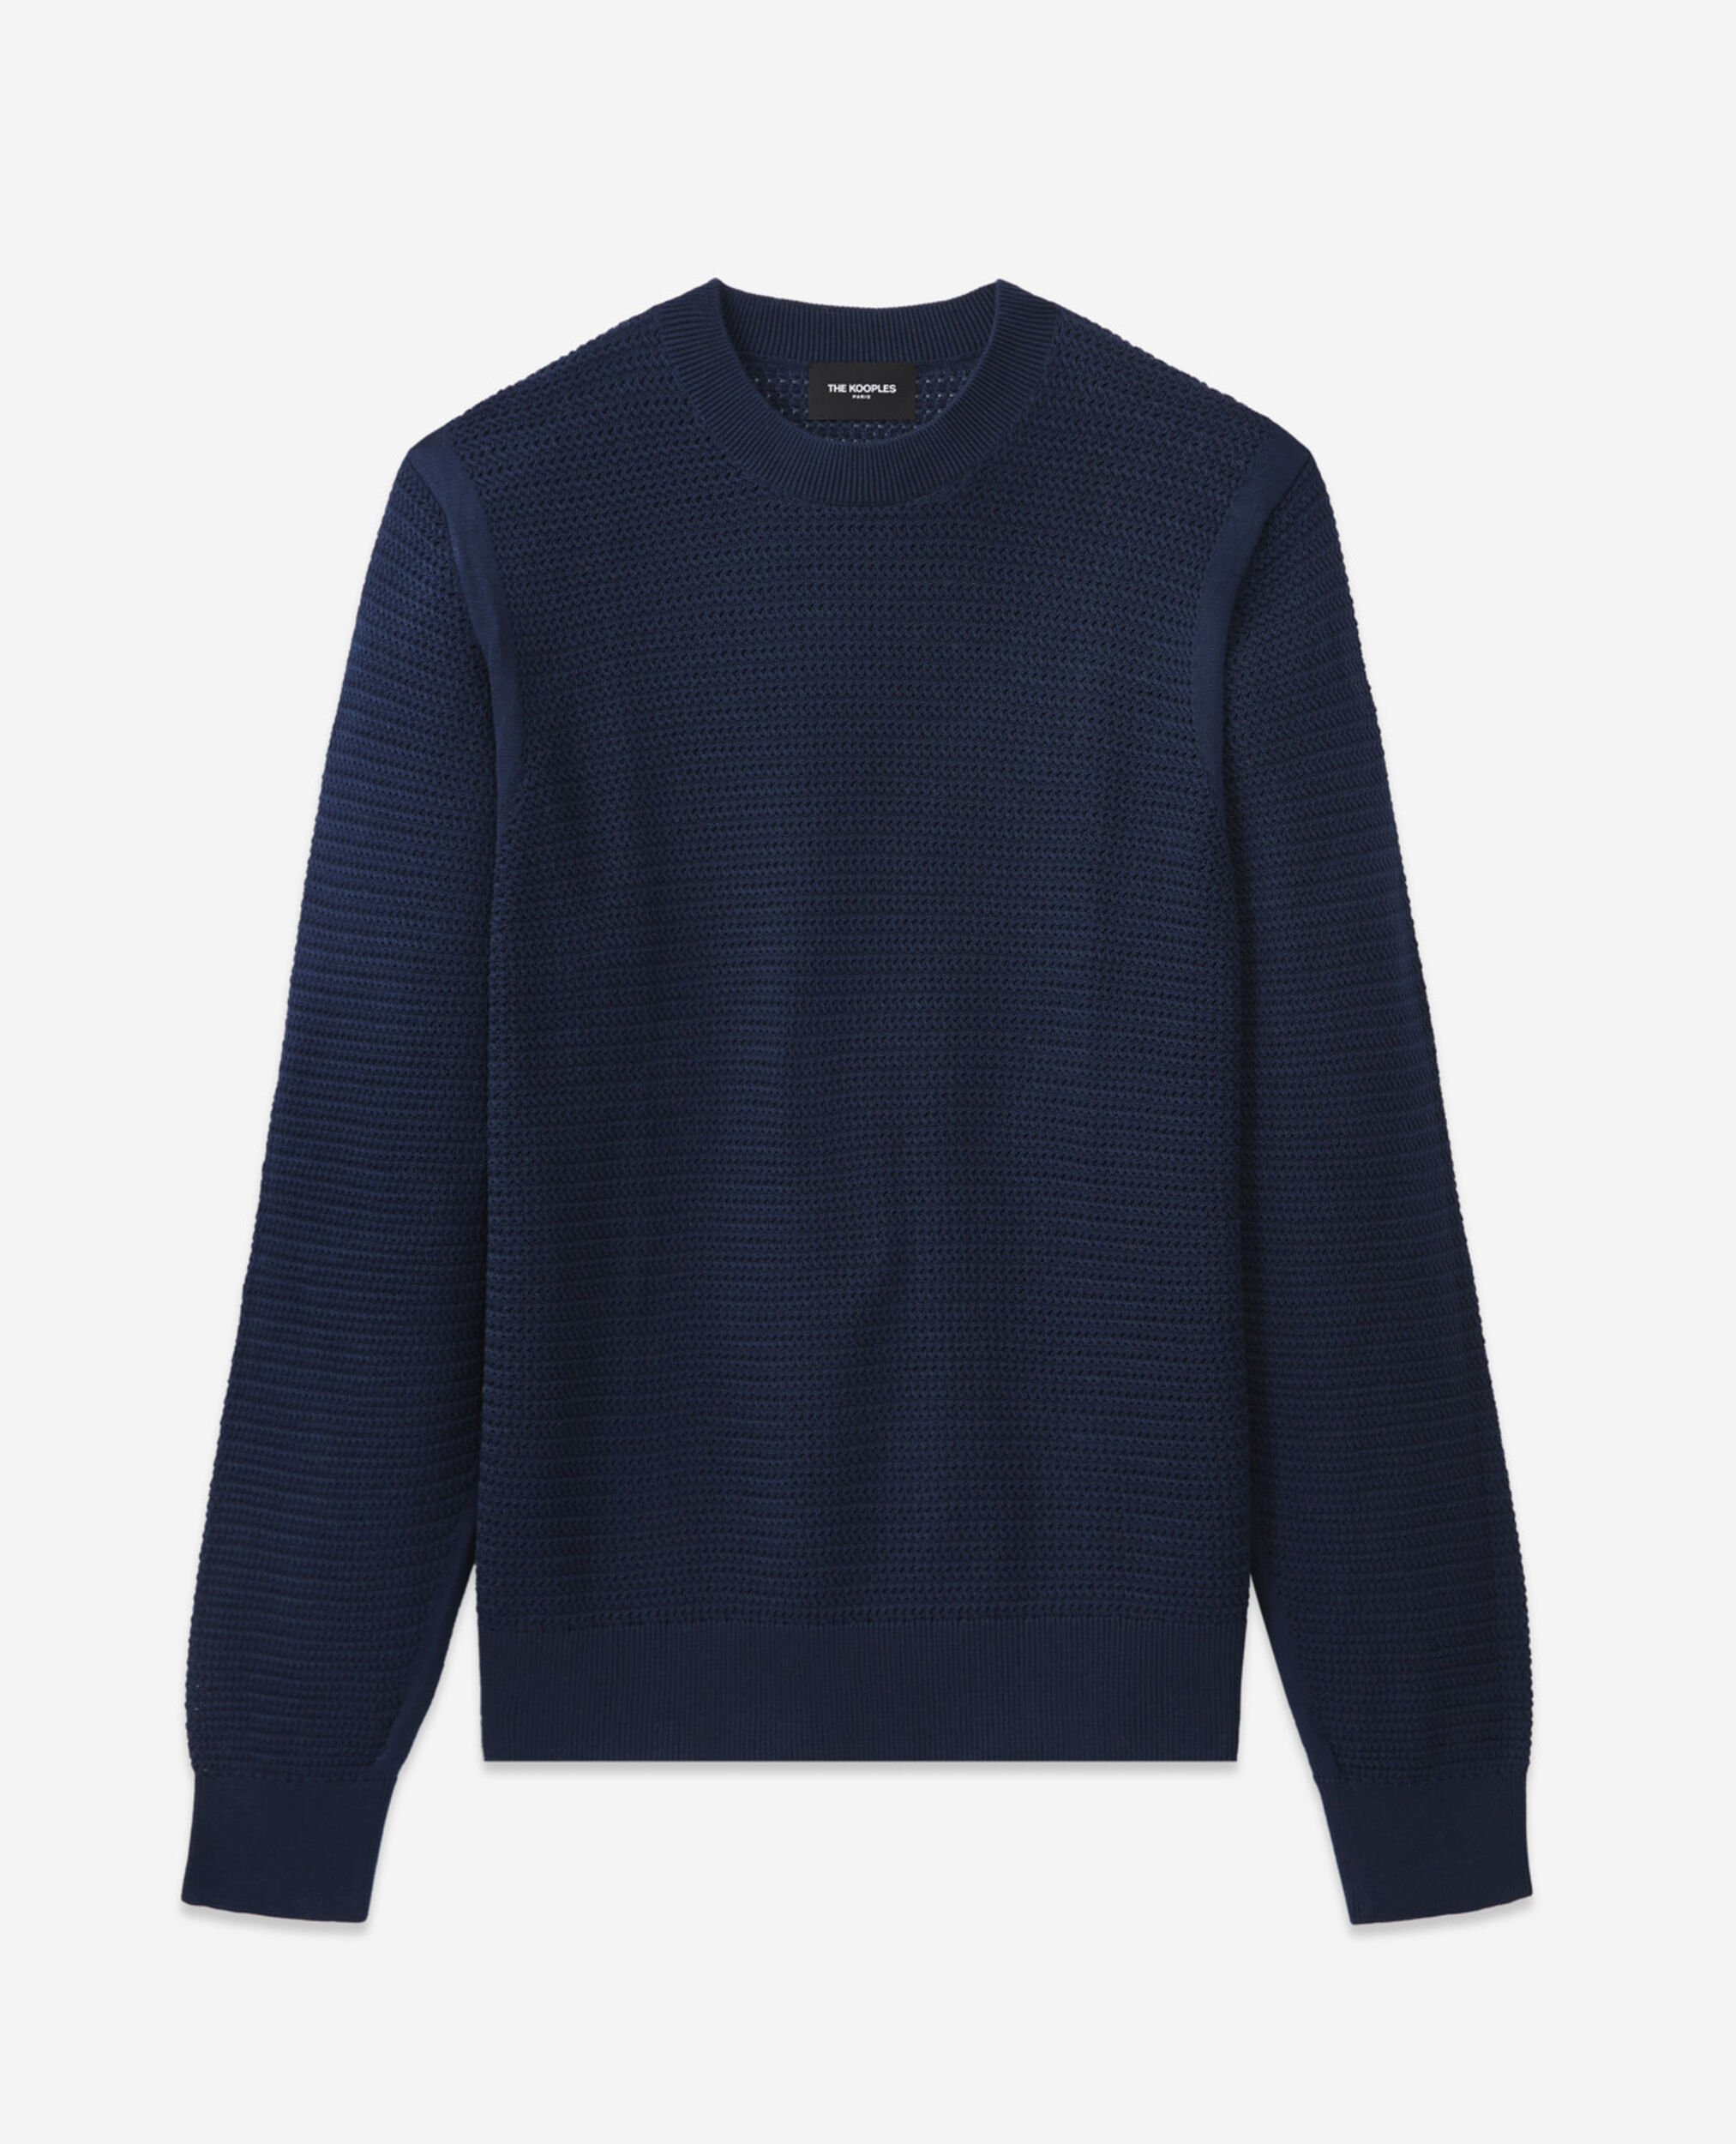 Navy cotton sweater, DARK NAVY, hi-res image number null